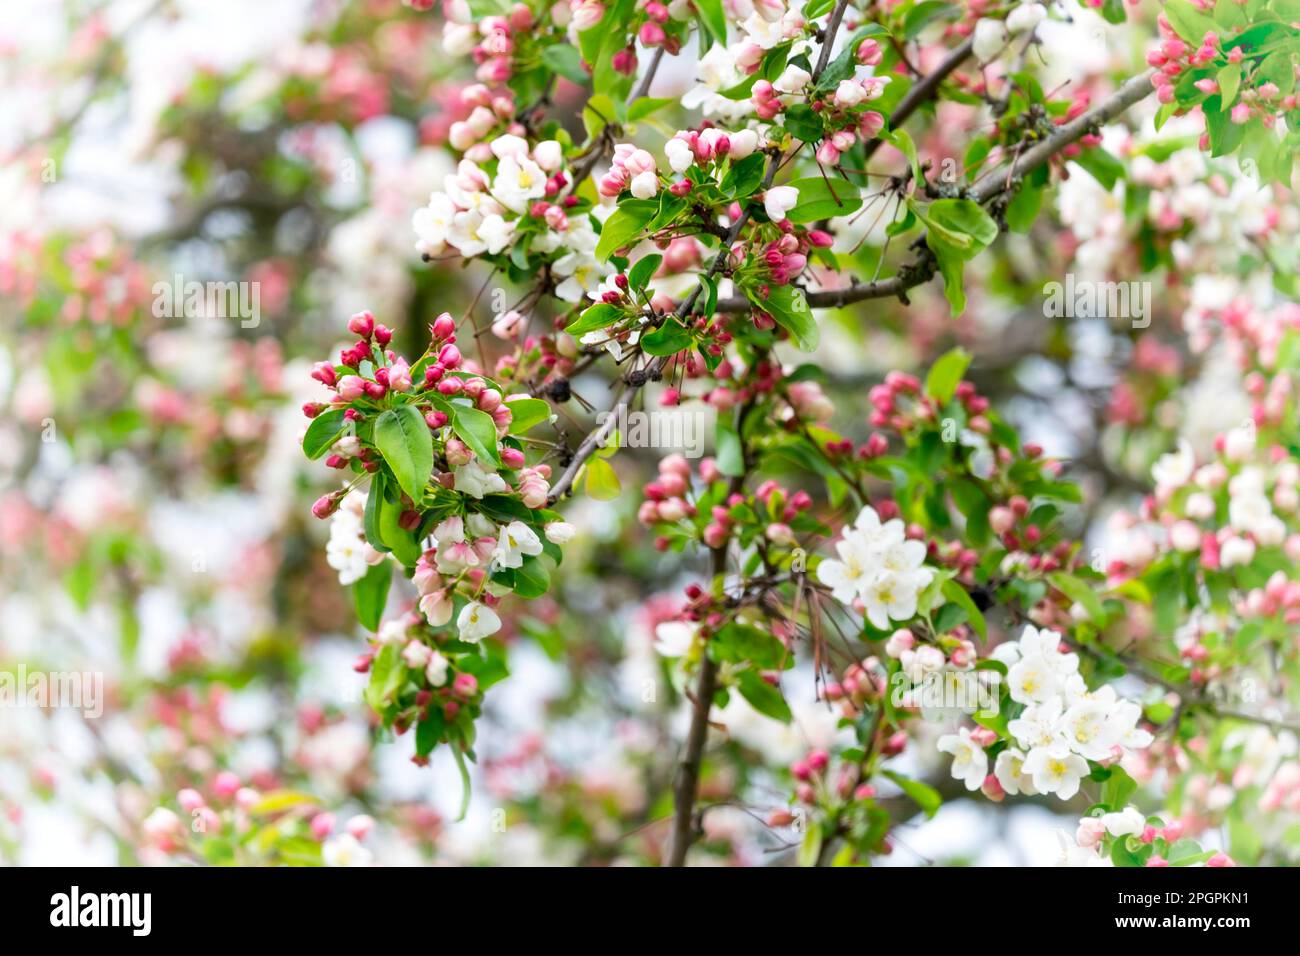 Ornamental apple blossom Stock Photo